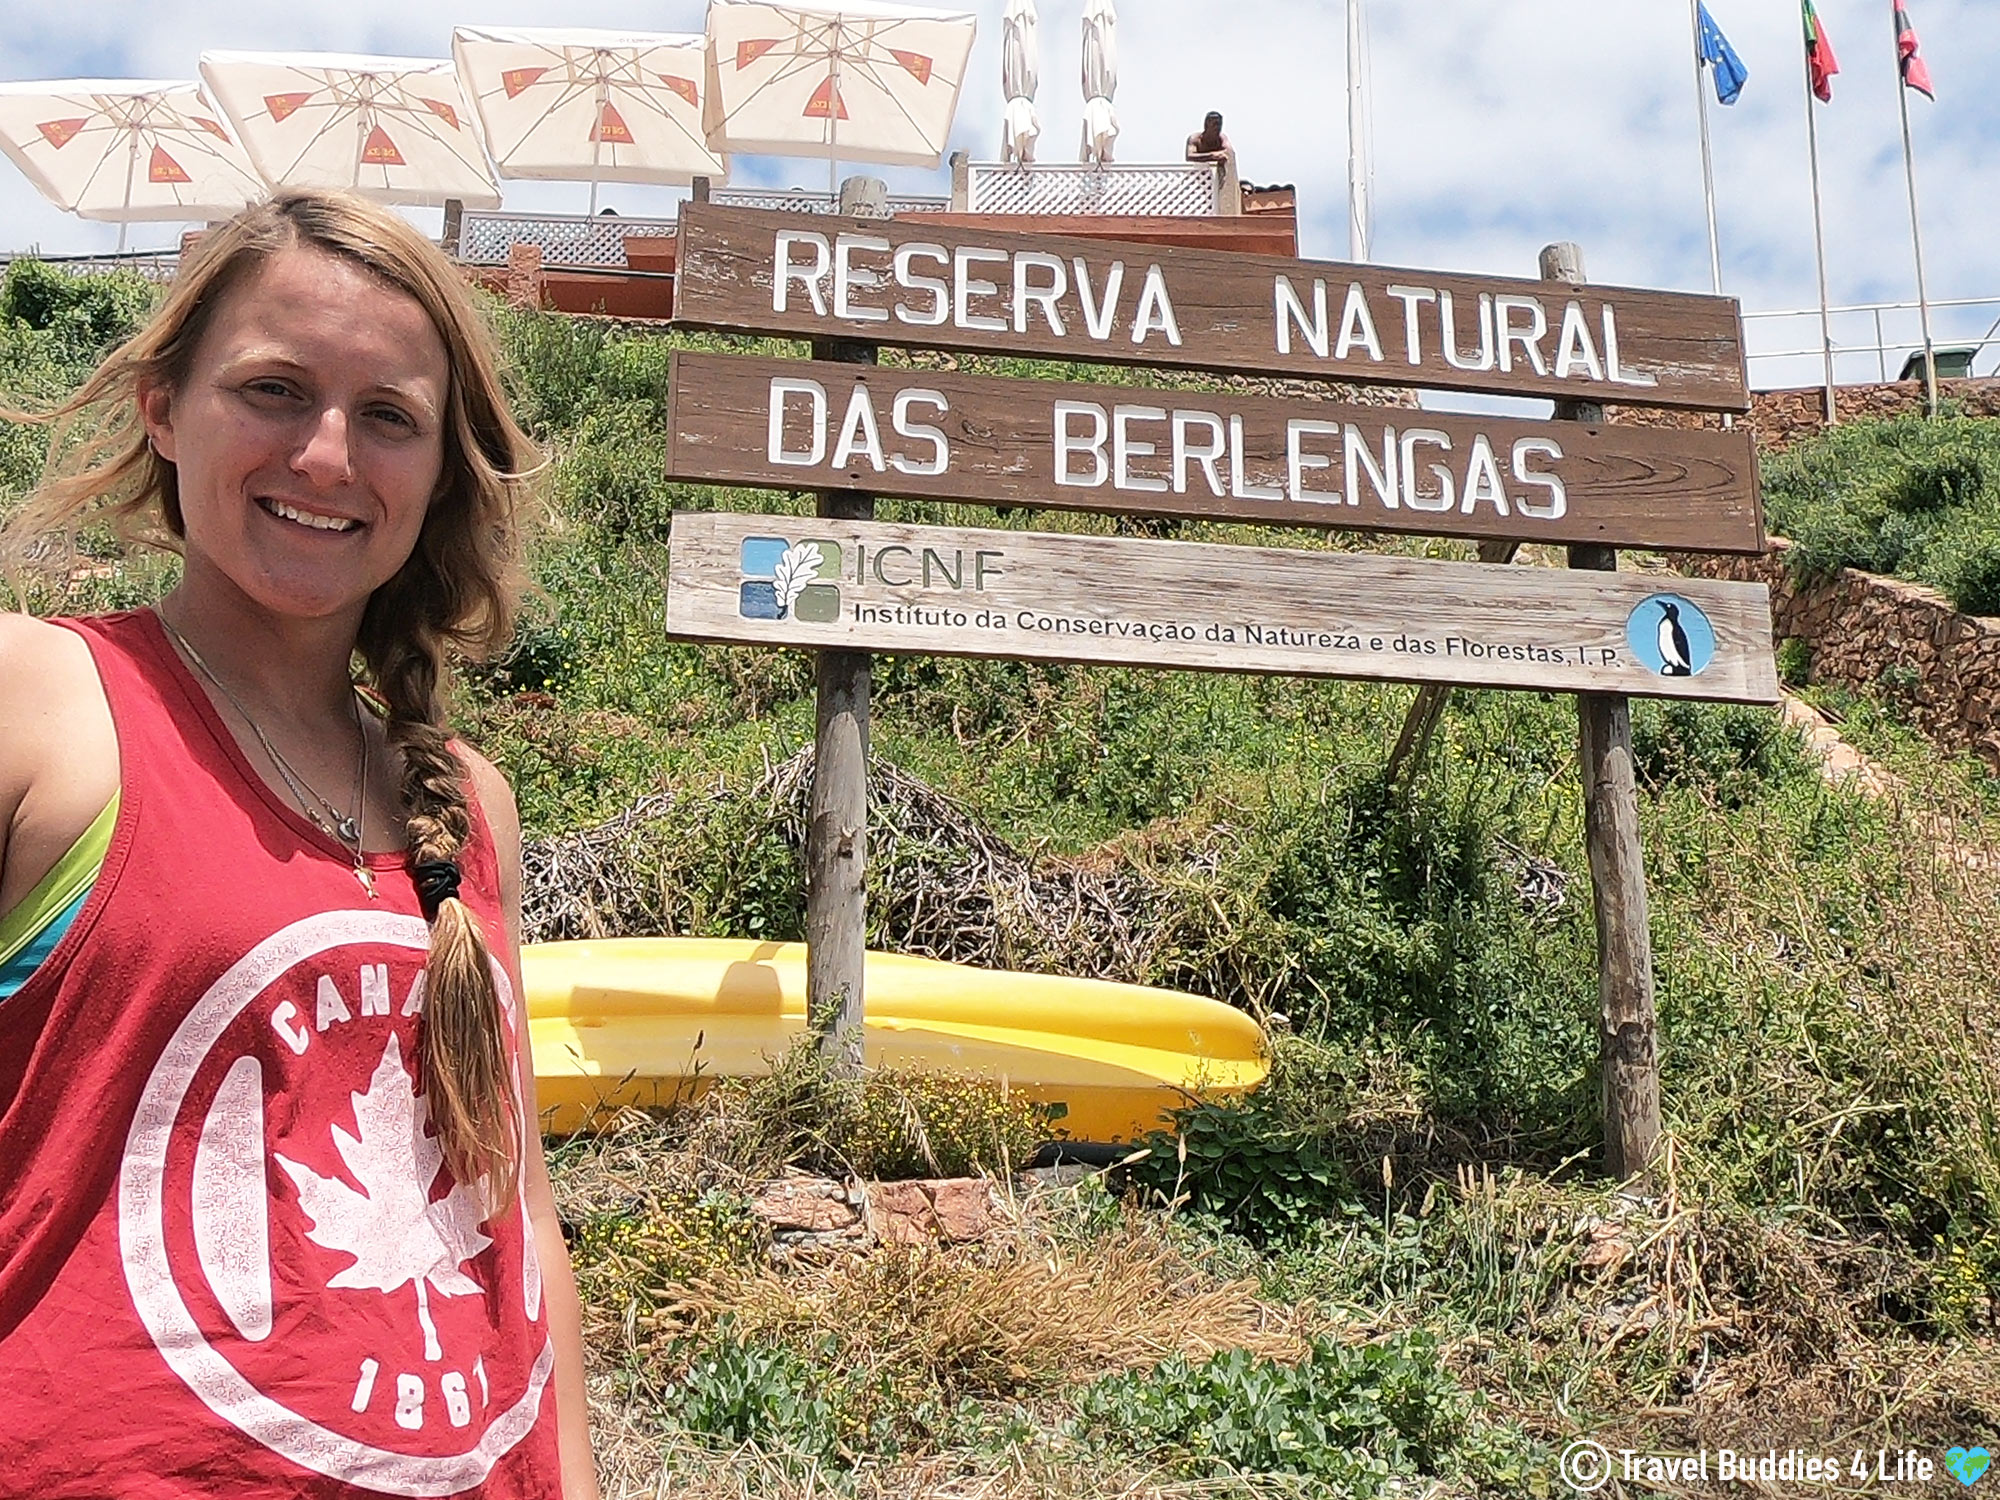 The Berlengas Islands Reserve Sign In Peniche, Portugal